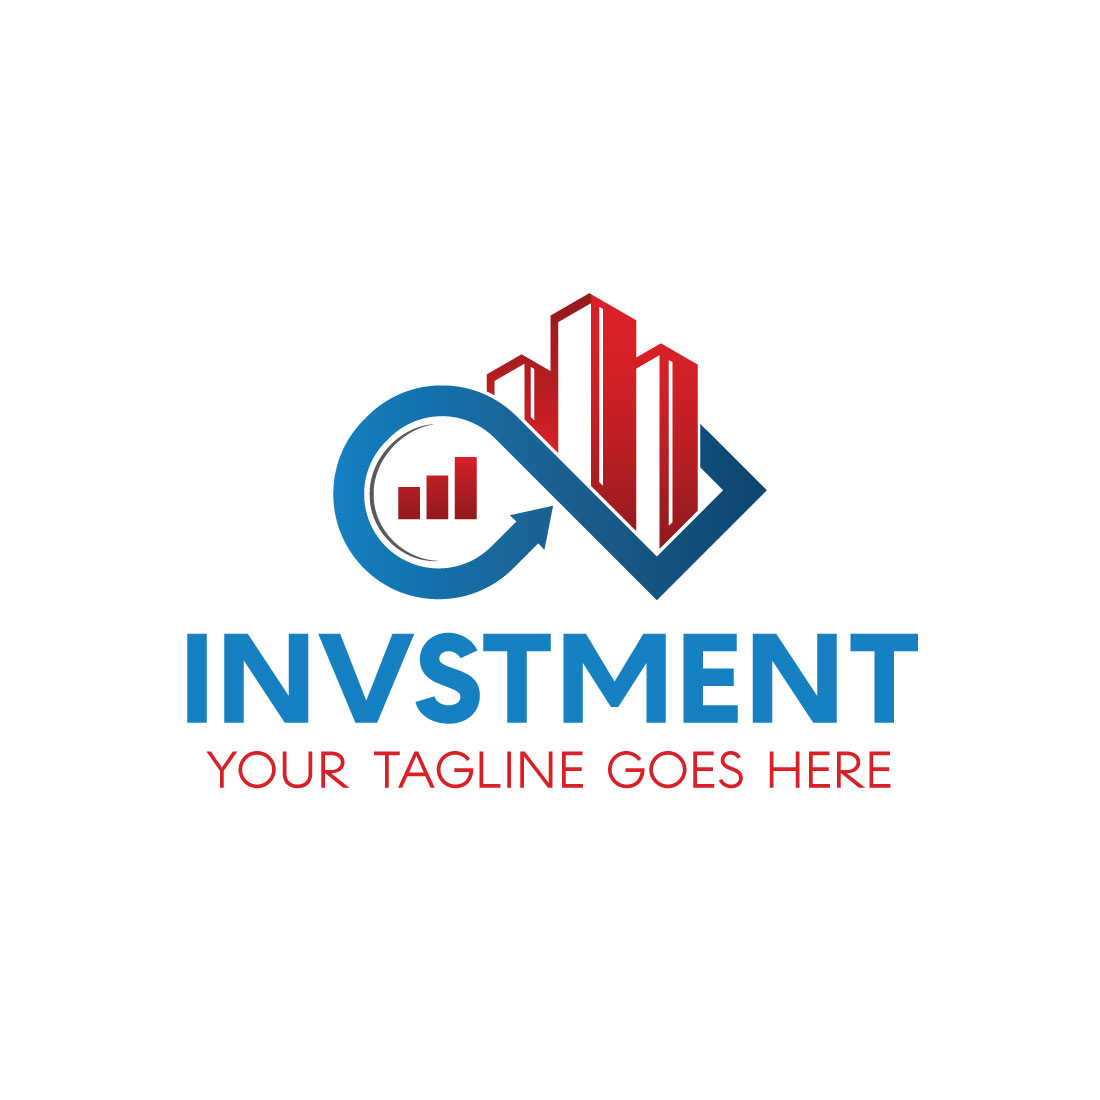 Professional Investment Logo design cover image.